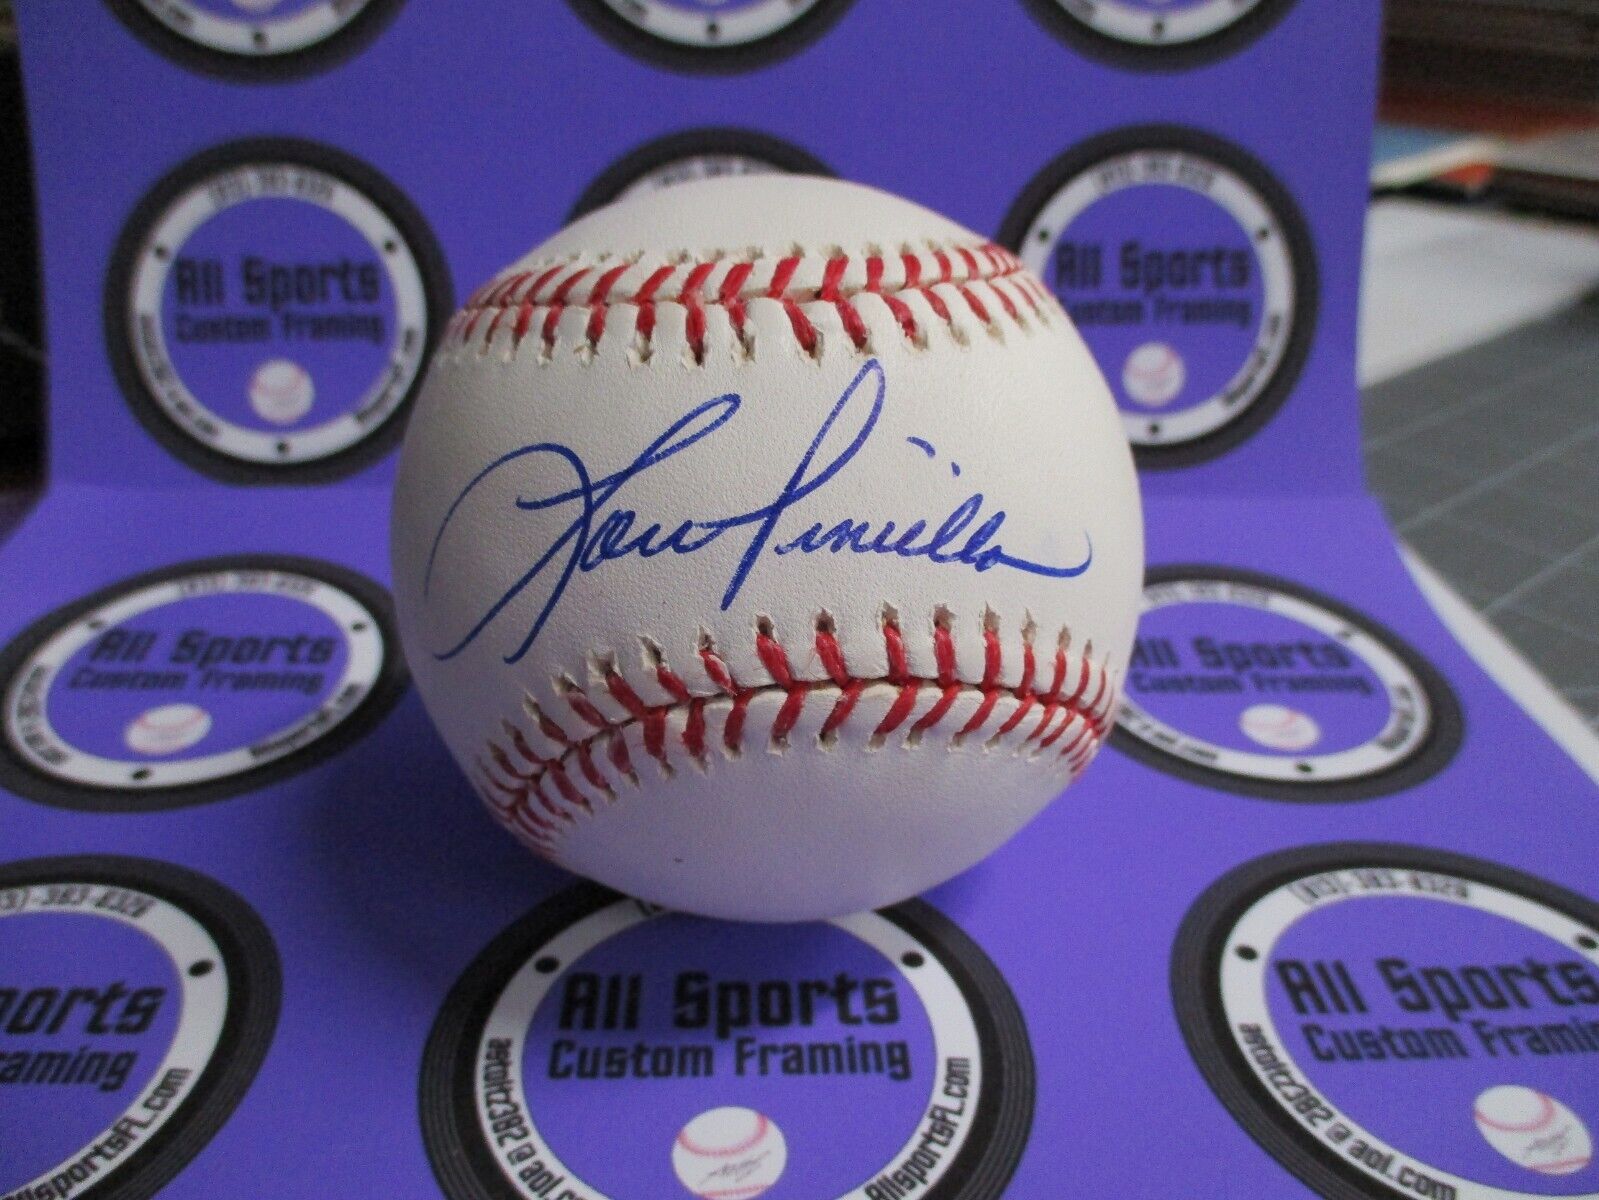 Lou Piniella Autographed Baseball New York Yankees JSA #AD60459 NICE clean ball